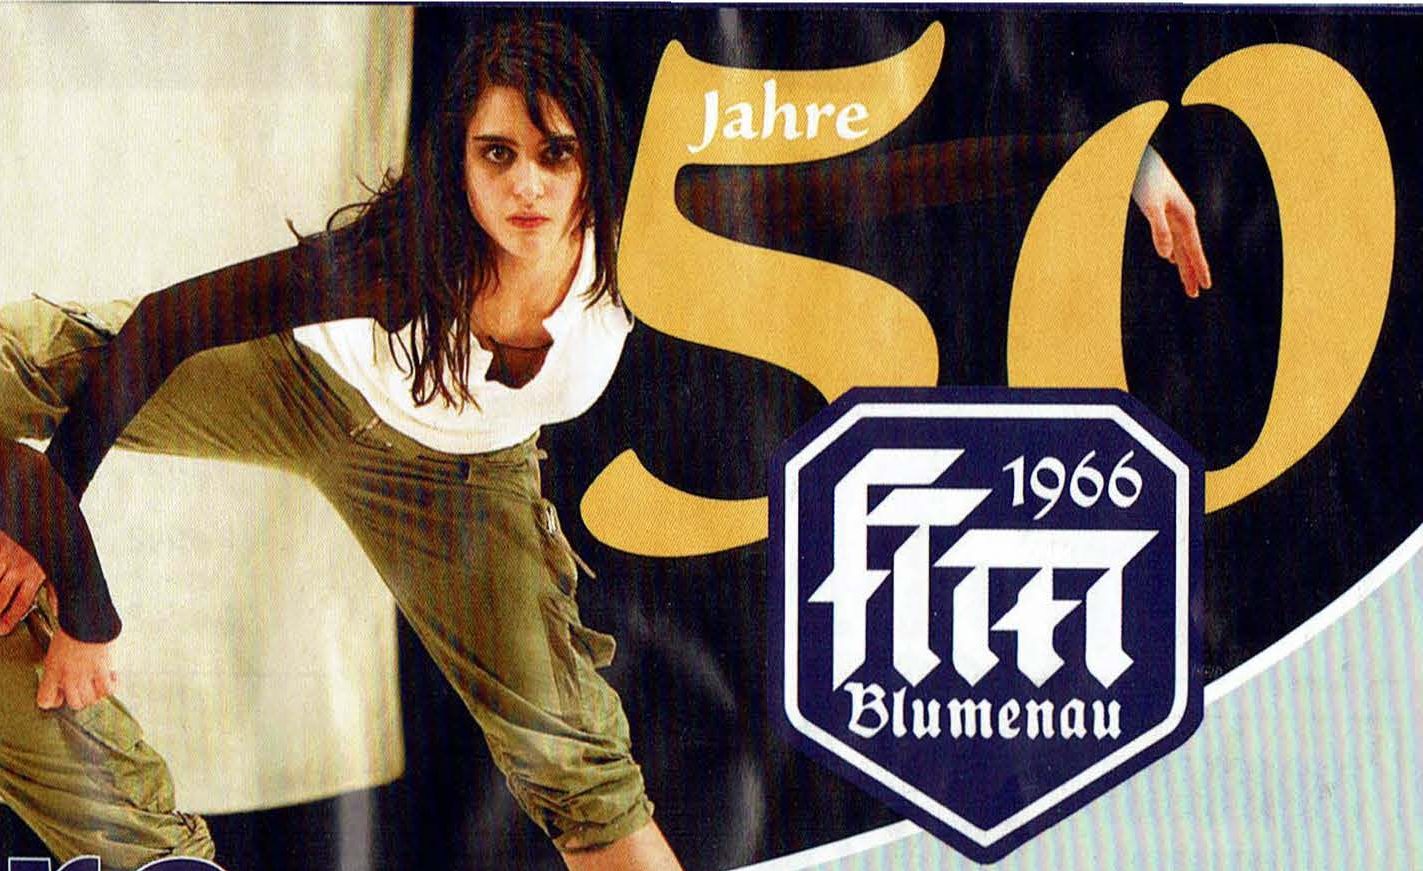 50 Jahre FTM Blumenau